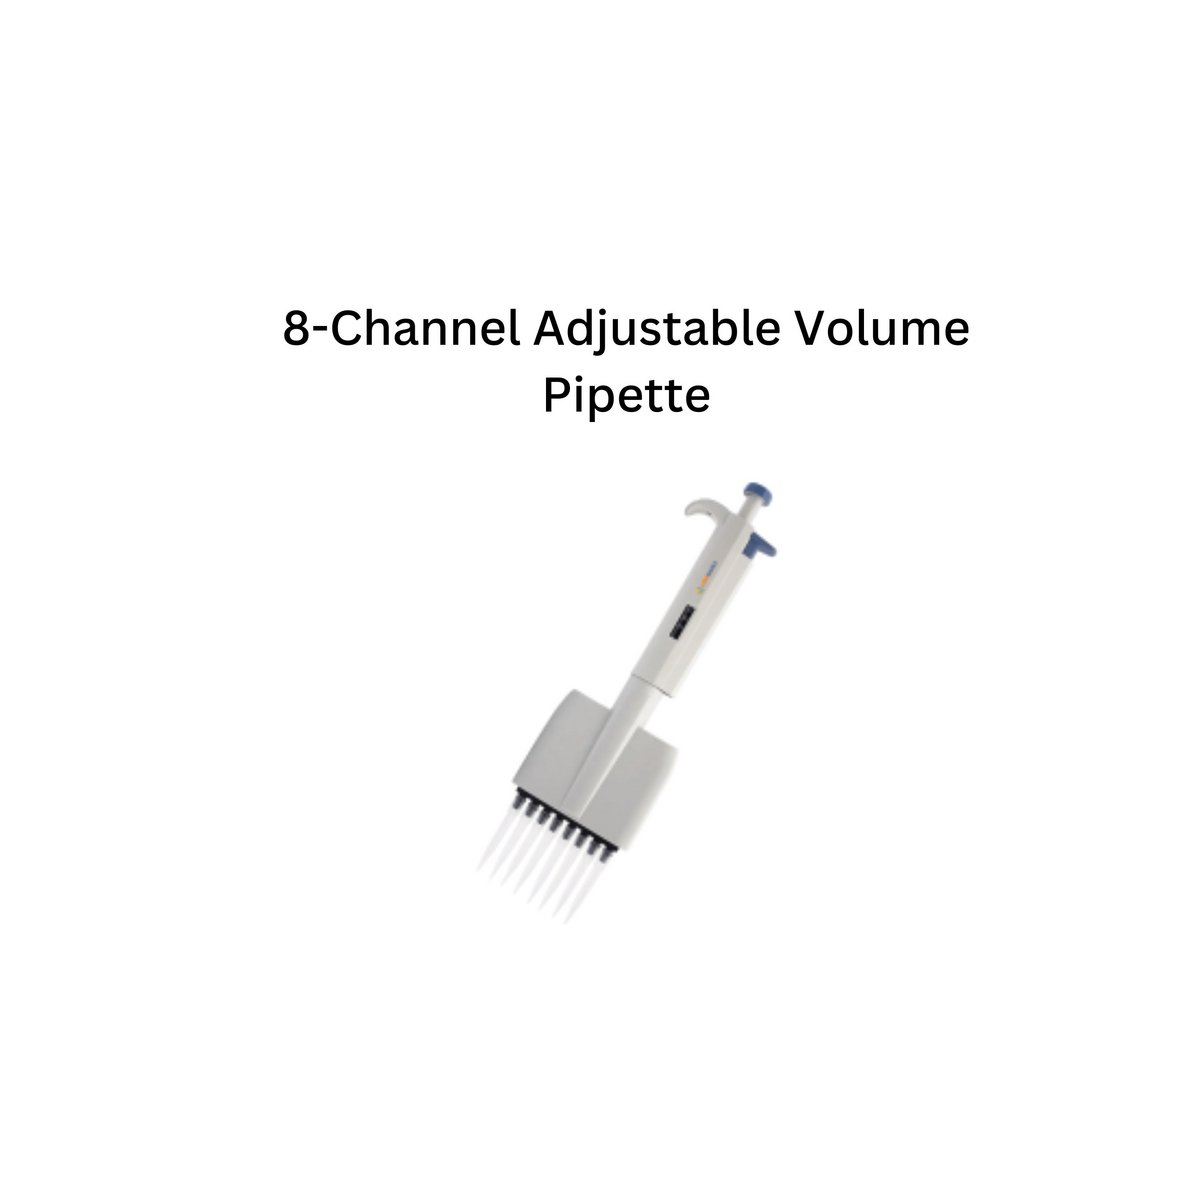 8-Channel Adjustable Volume Pipette - Copy.jpg